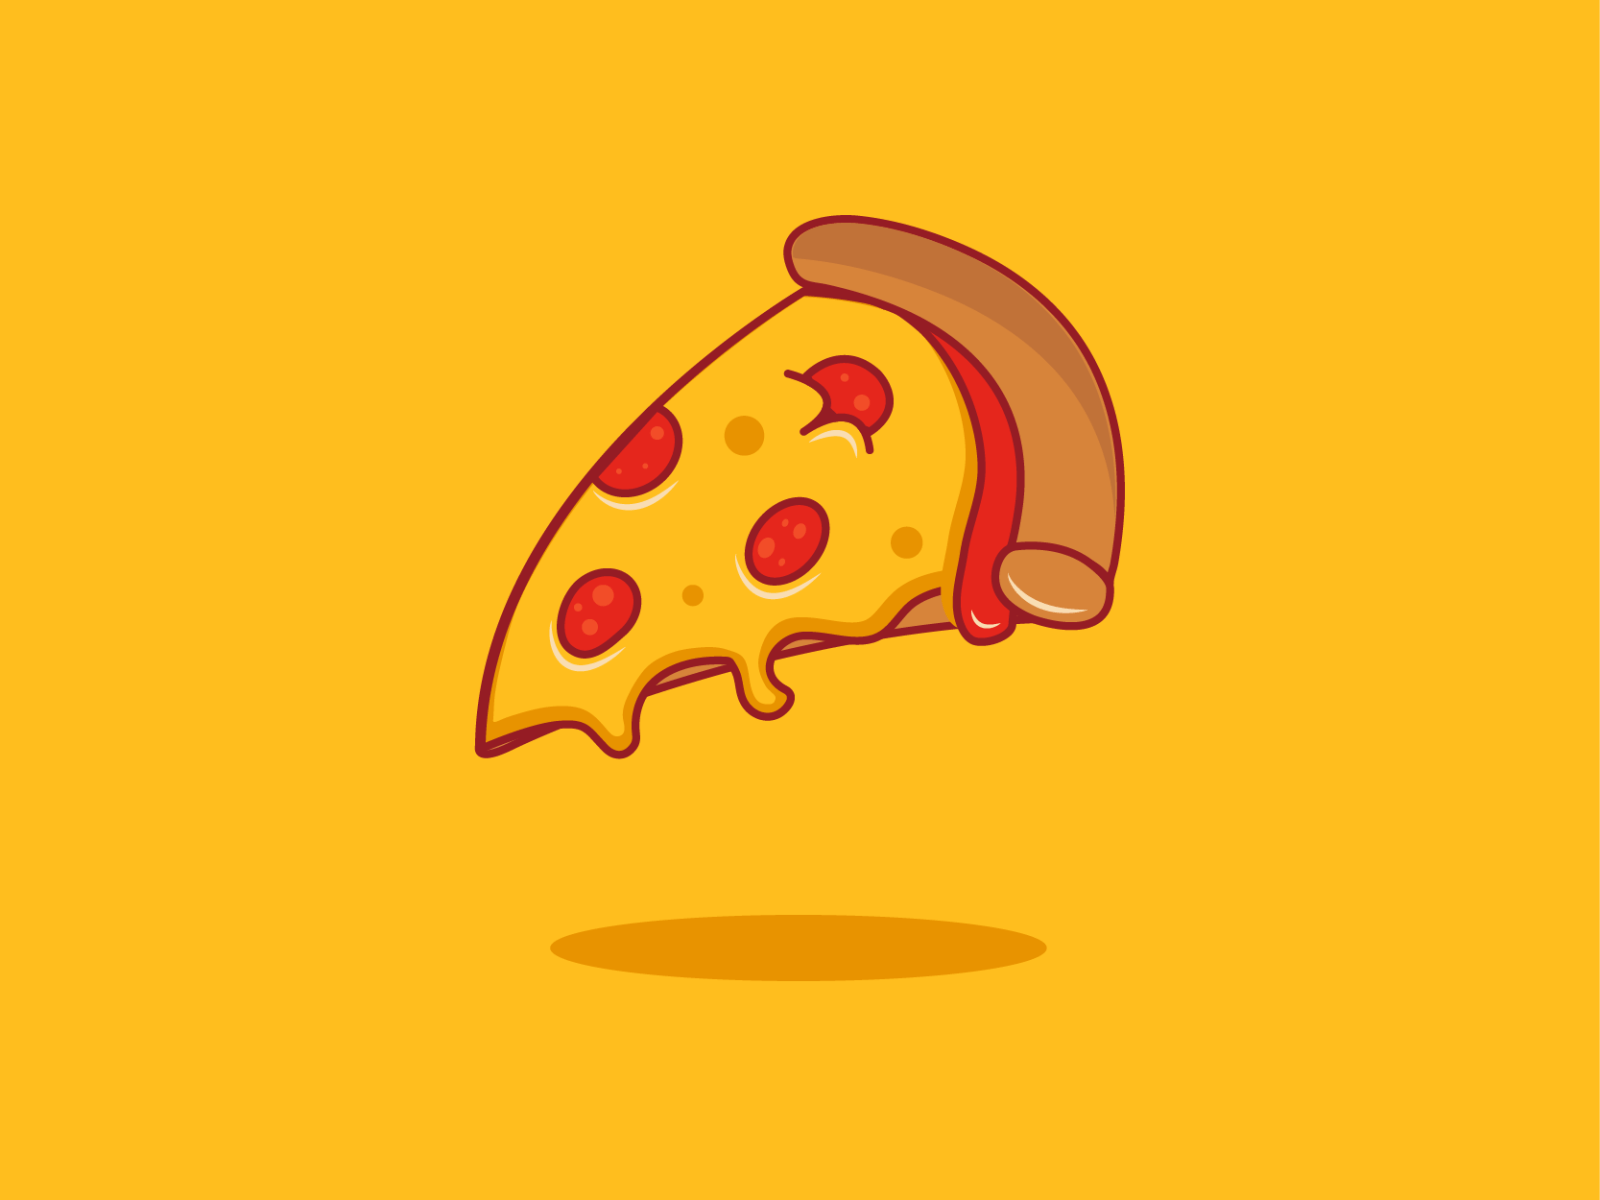 Pizza Illustration